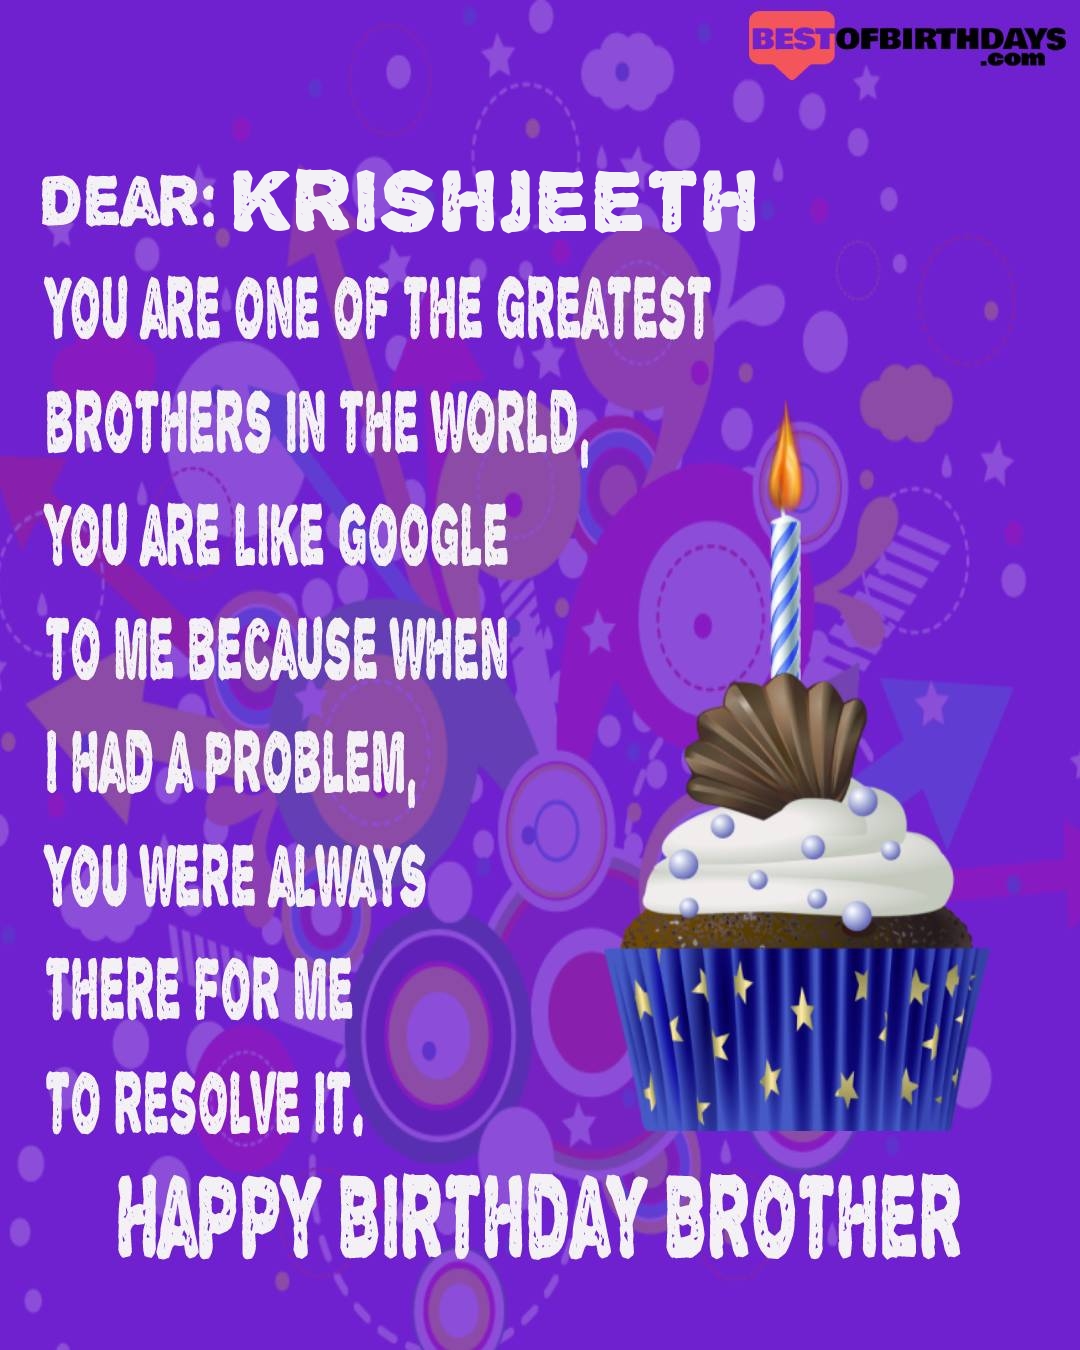 Happy birthday krishjeeth bhai brother bro